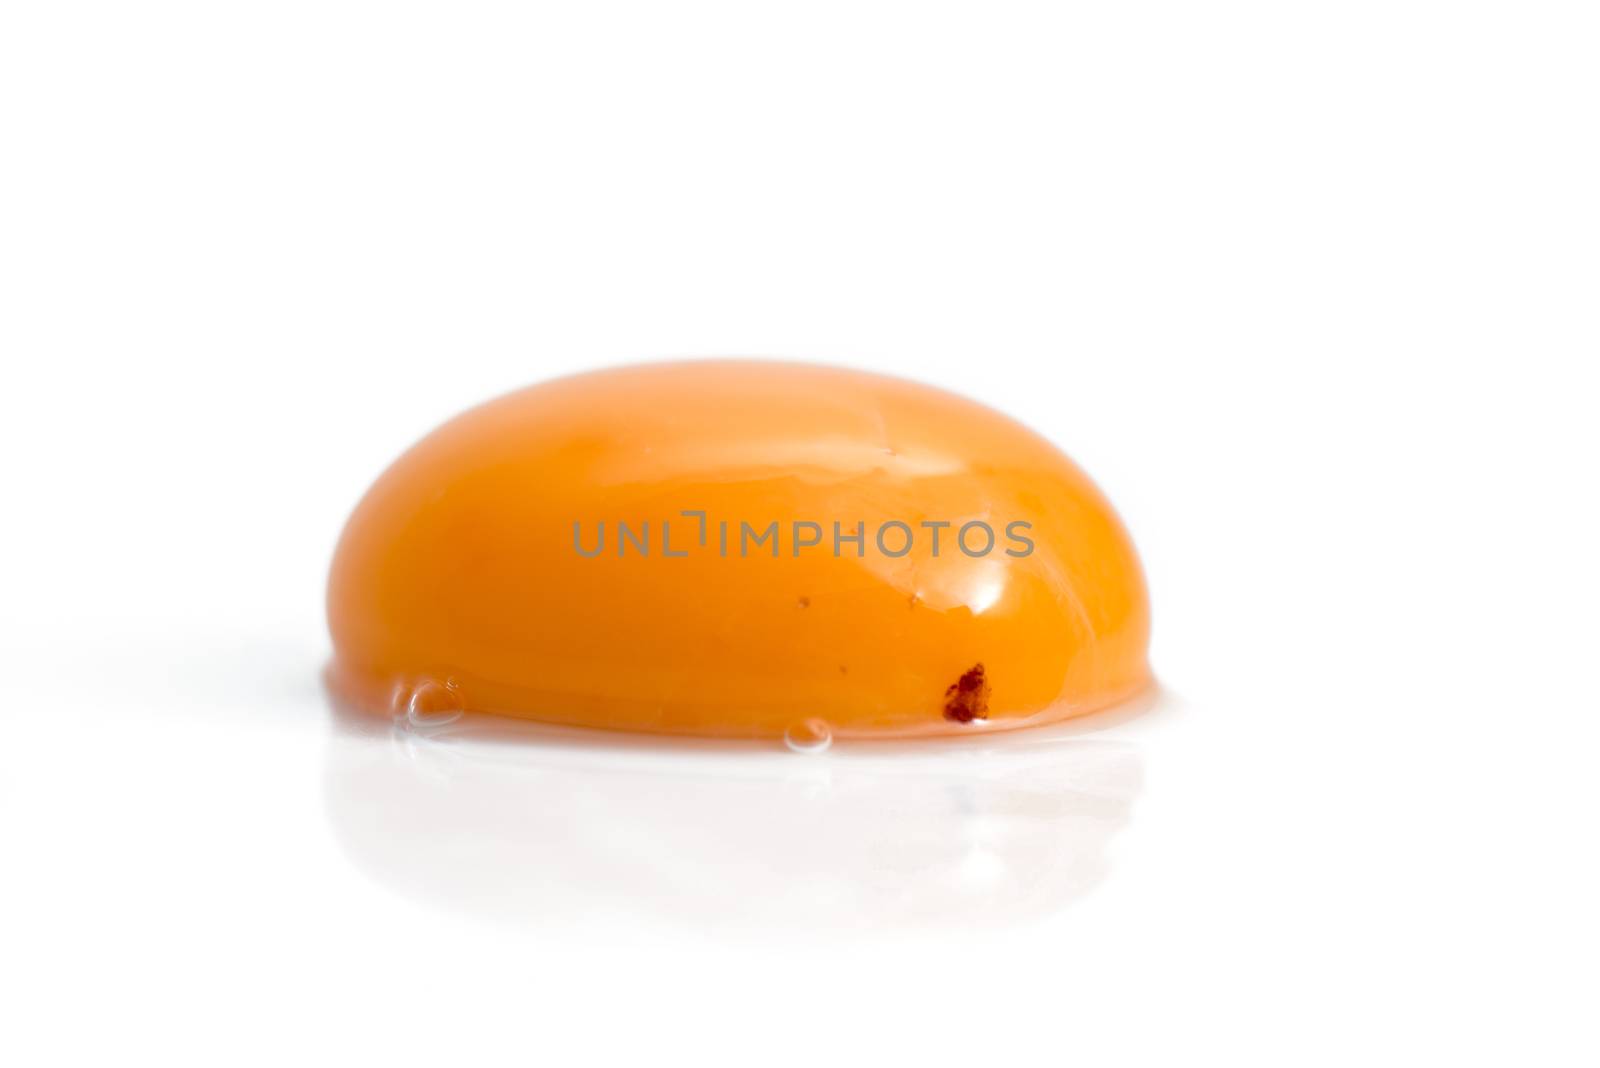 raw egg yolk isolated on white background by antpkr